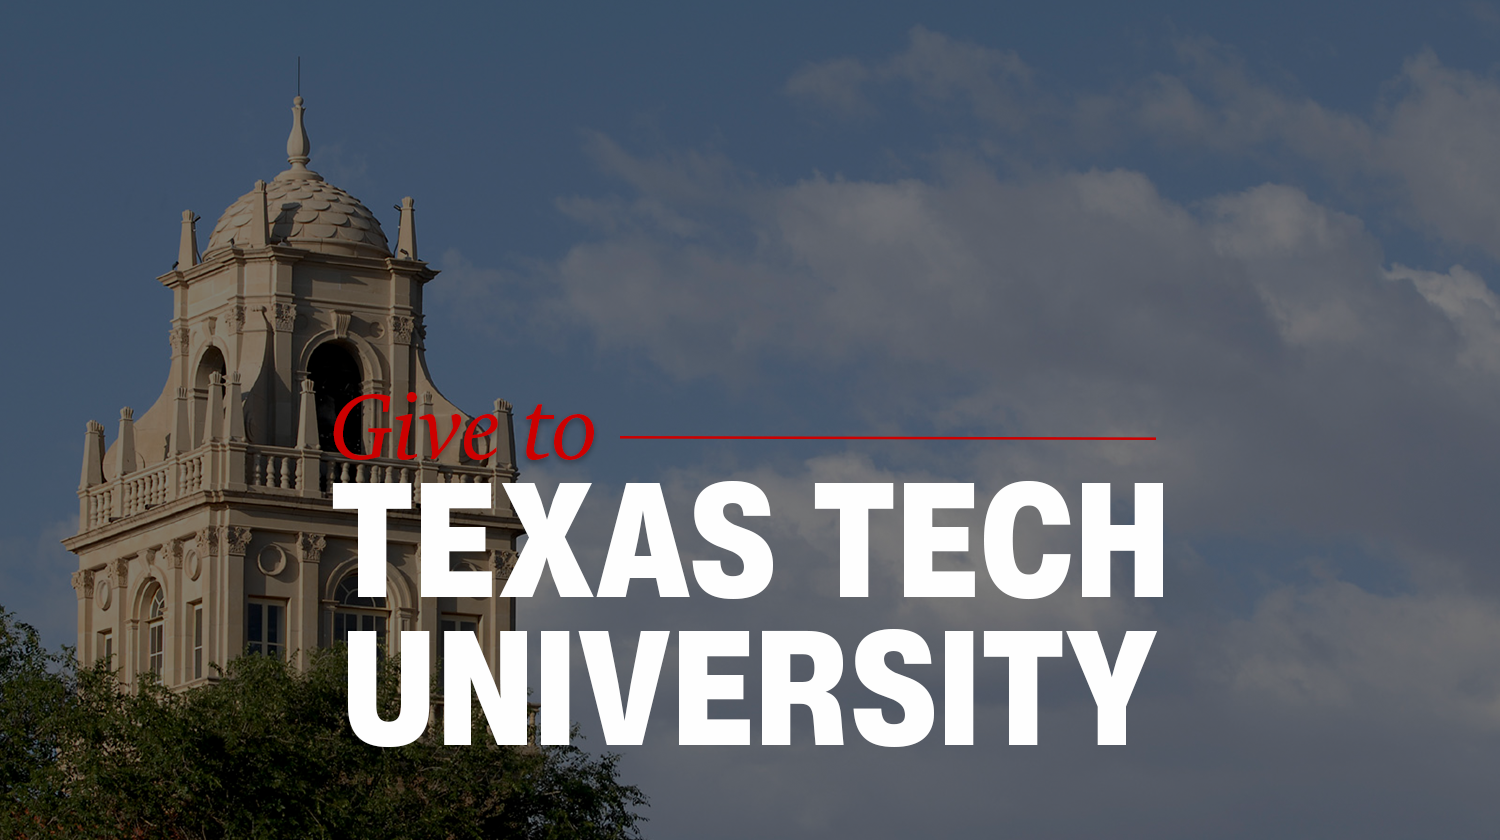 Give to Texas Tech University